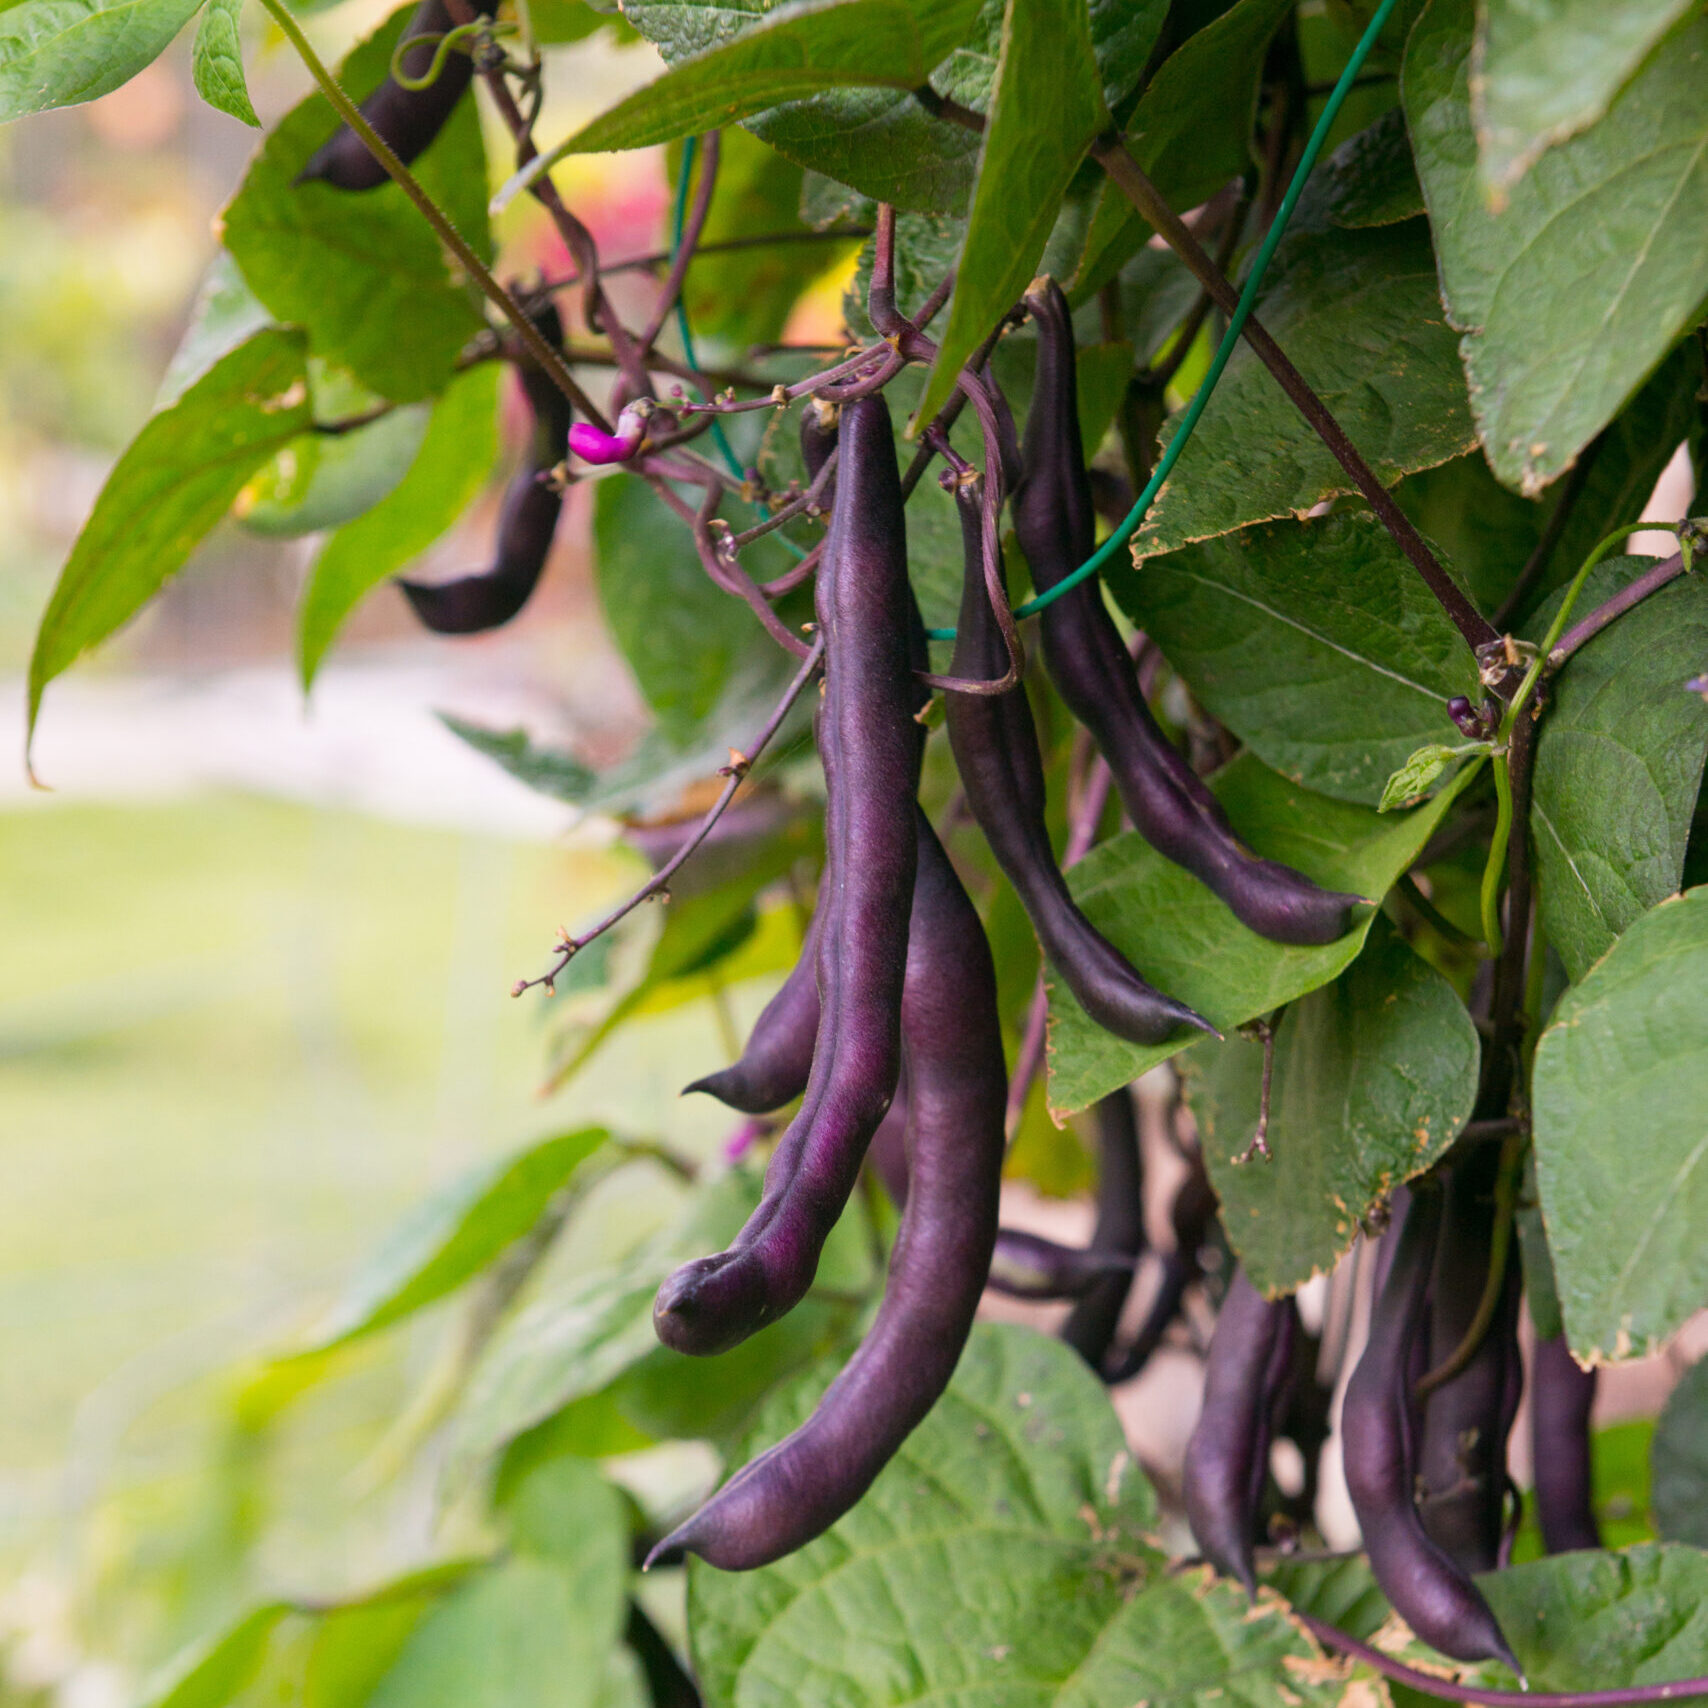 Special heirloom "purple" green beans